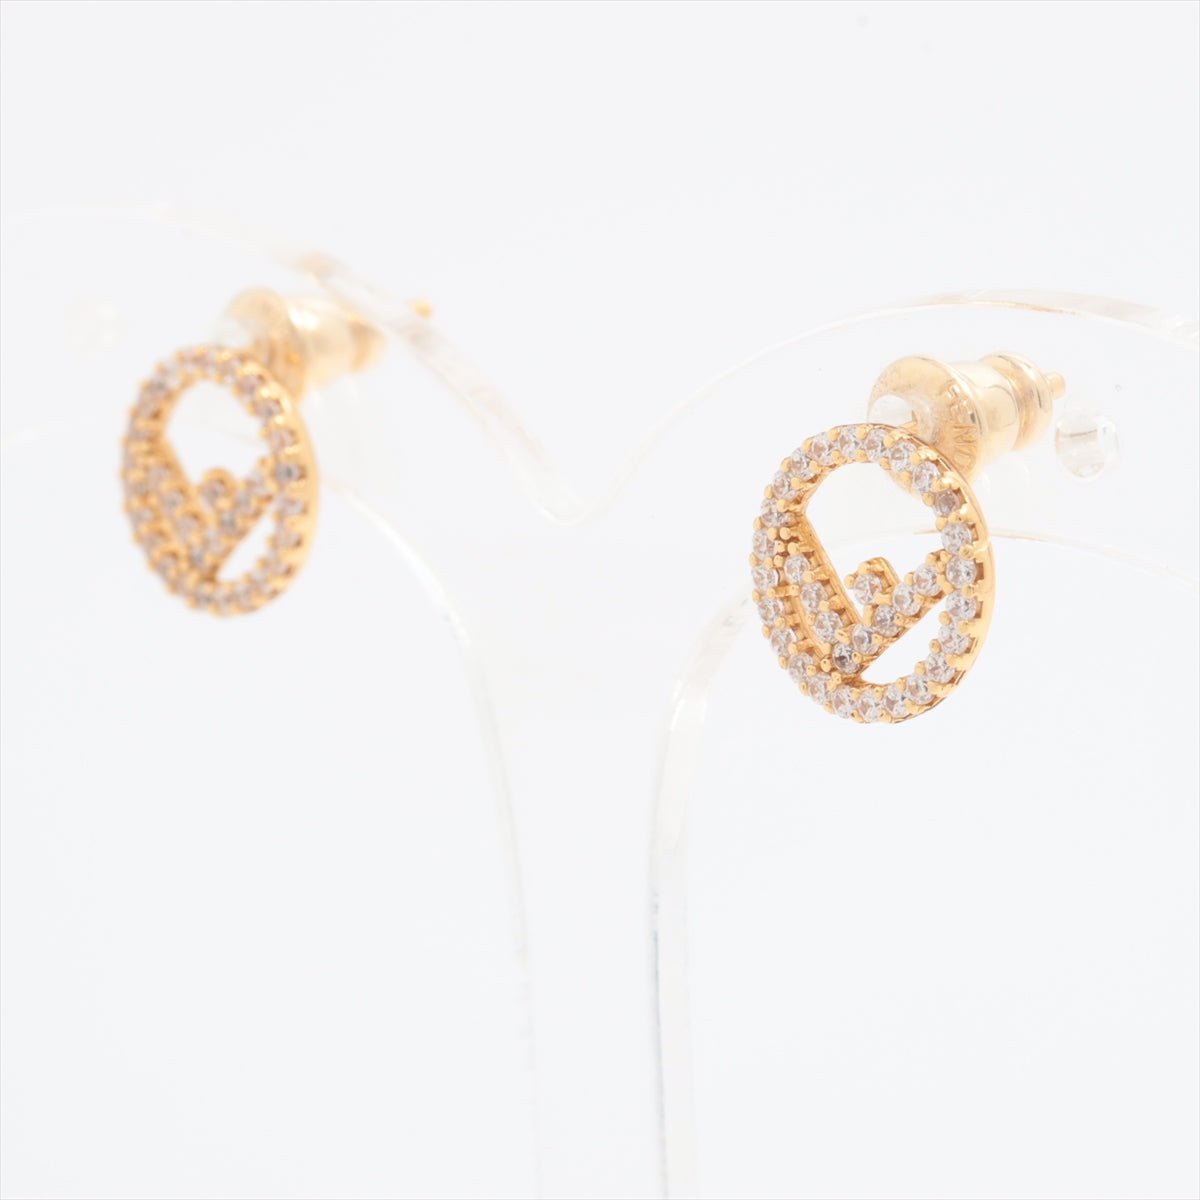 Fendi F is Fendi Piercing jewelry (for both ears) GP×inestone Gold